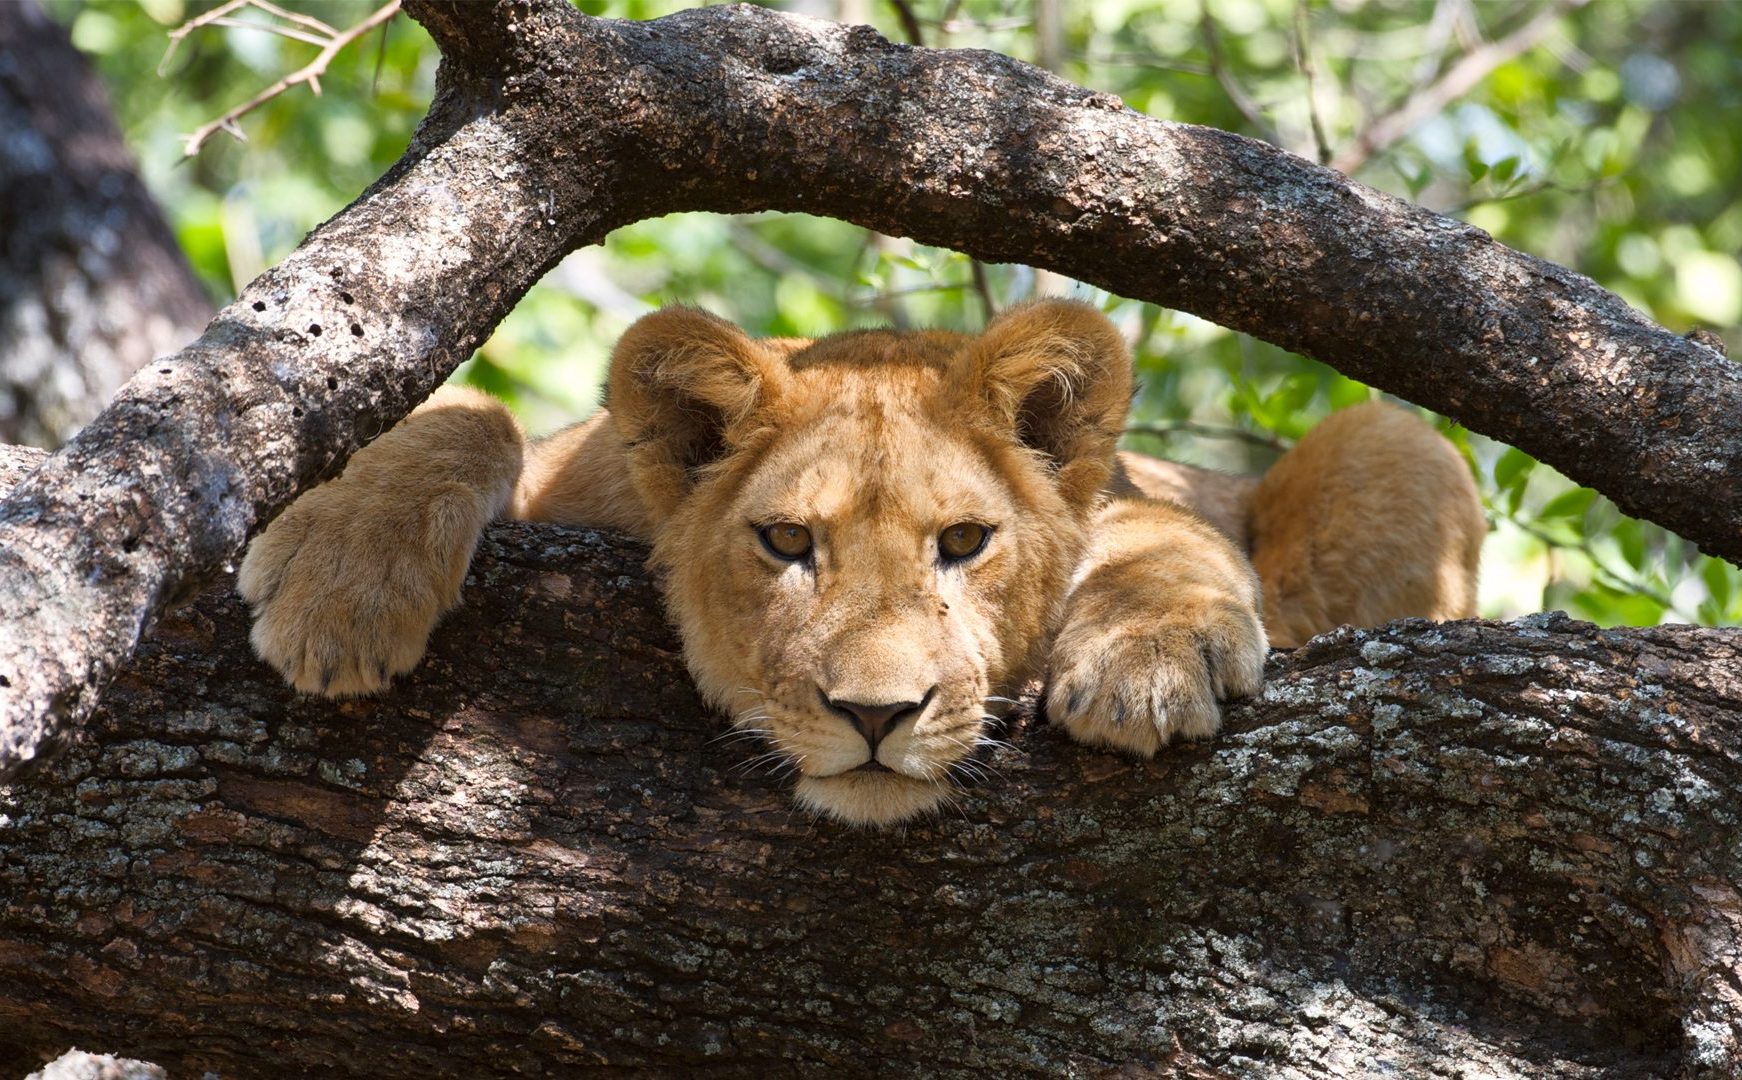 Tree climbing lions in Manyara National Park